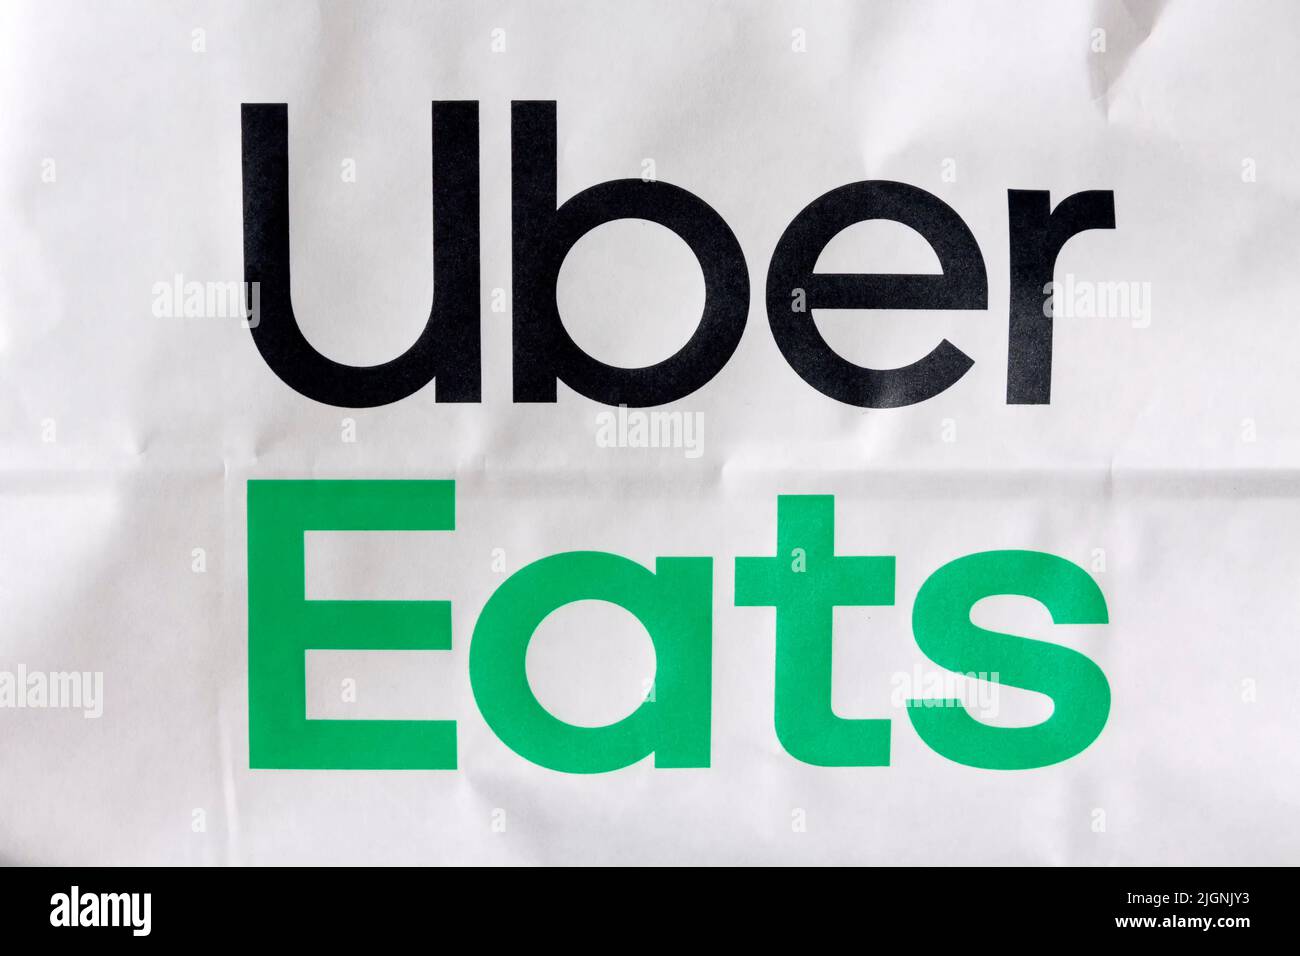 Paper bag of Uber Eats, Berlin, Germany Stock Photo